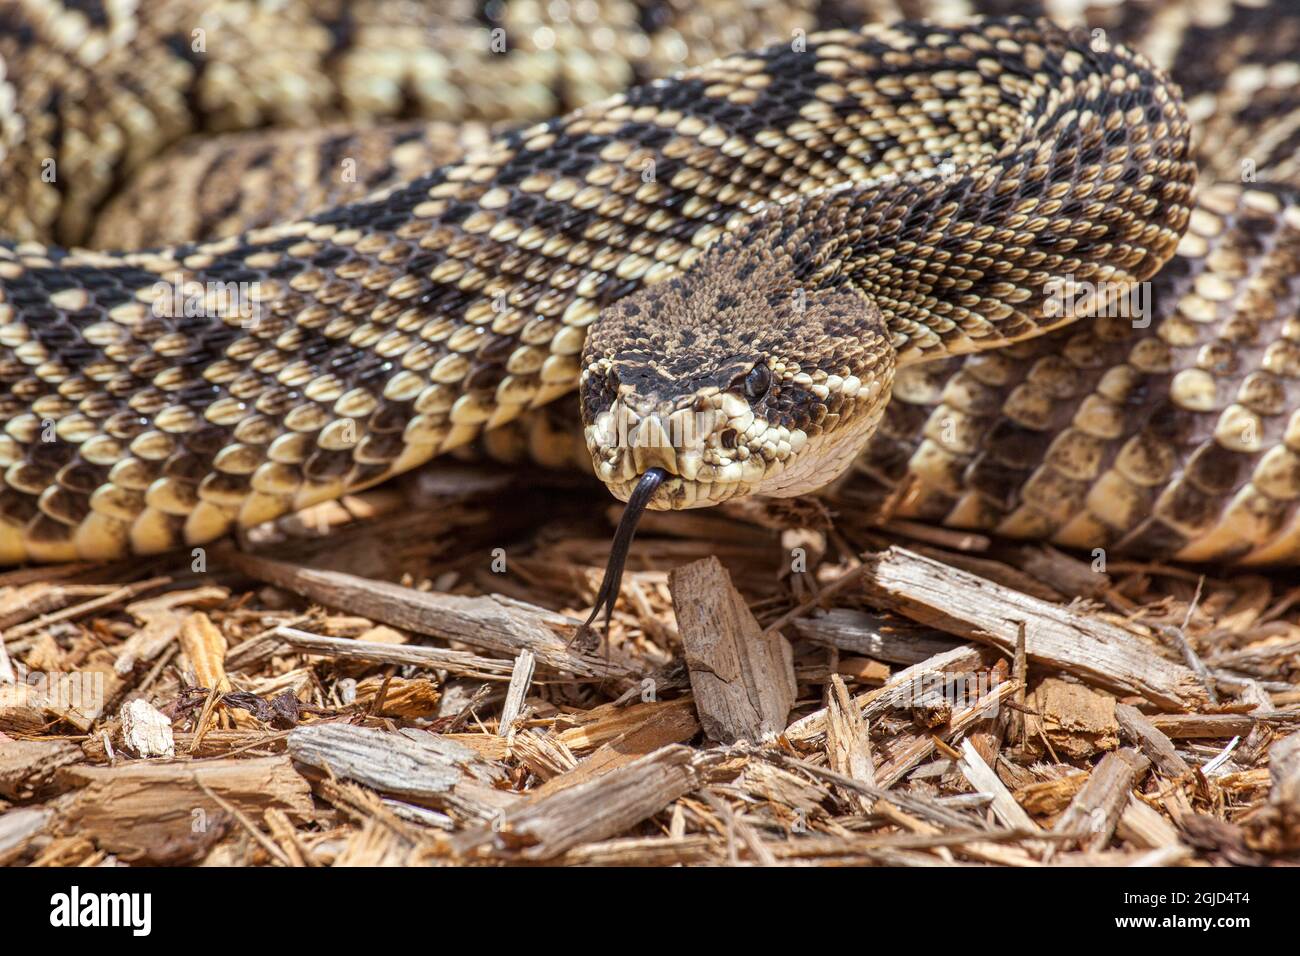 An eastern diamondback rattlesnake is venomous and becoming increasingly rare. Stock Photo